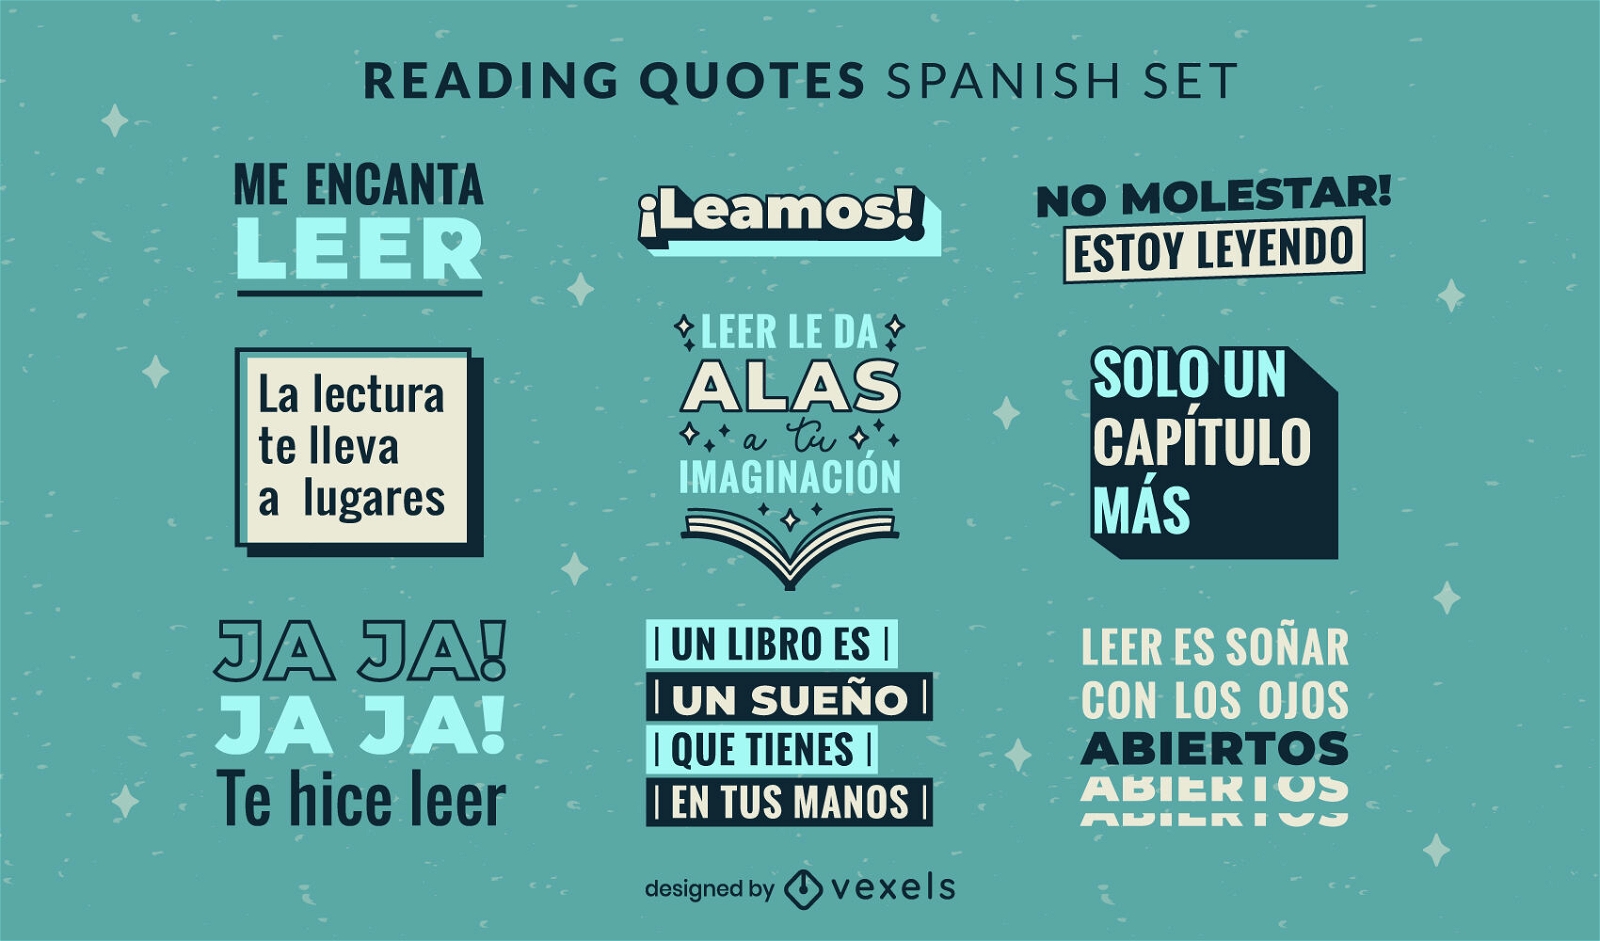 Reading quotes in spanish set